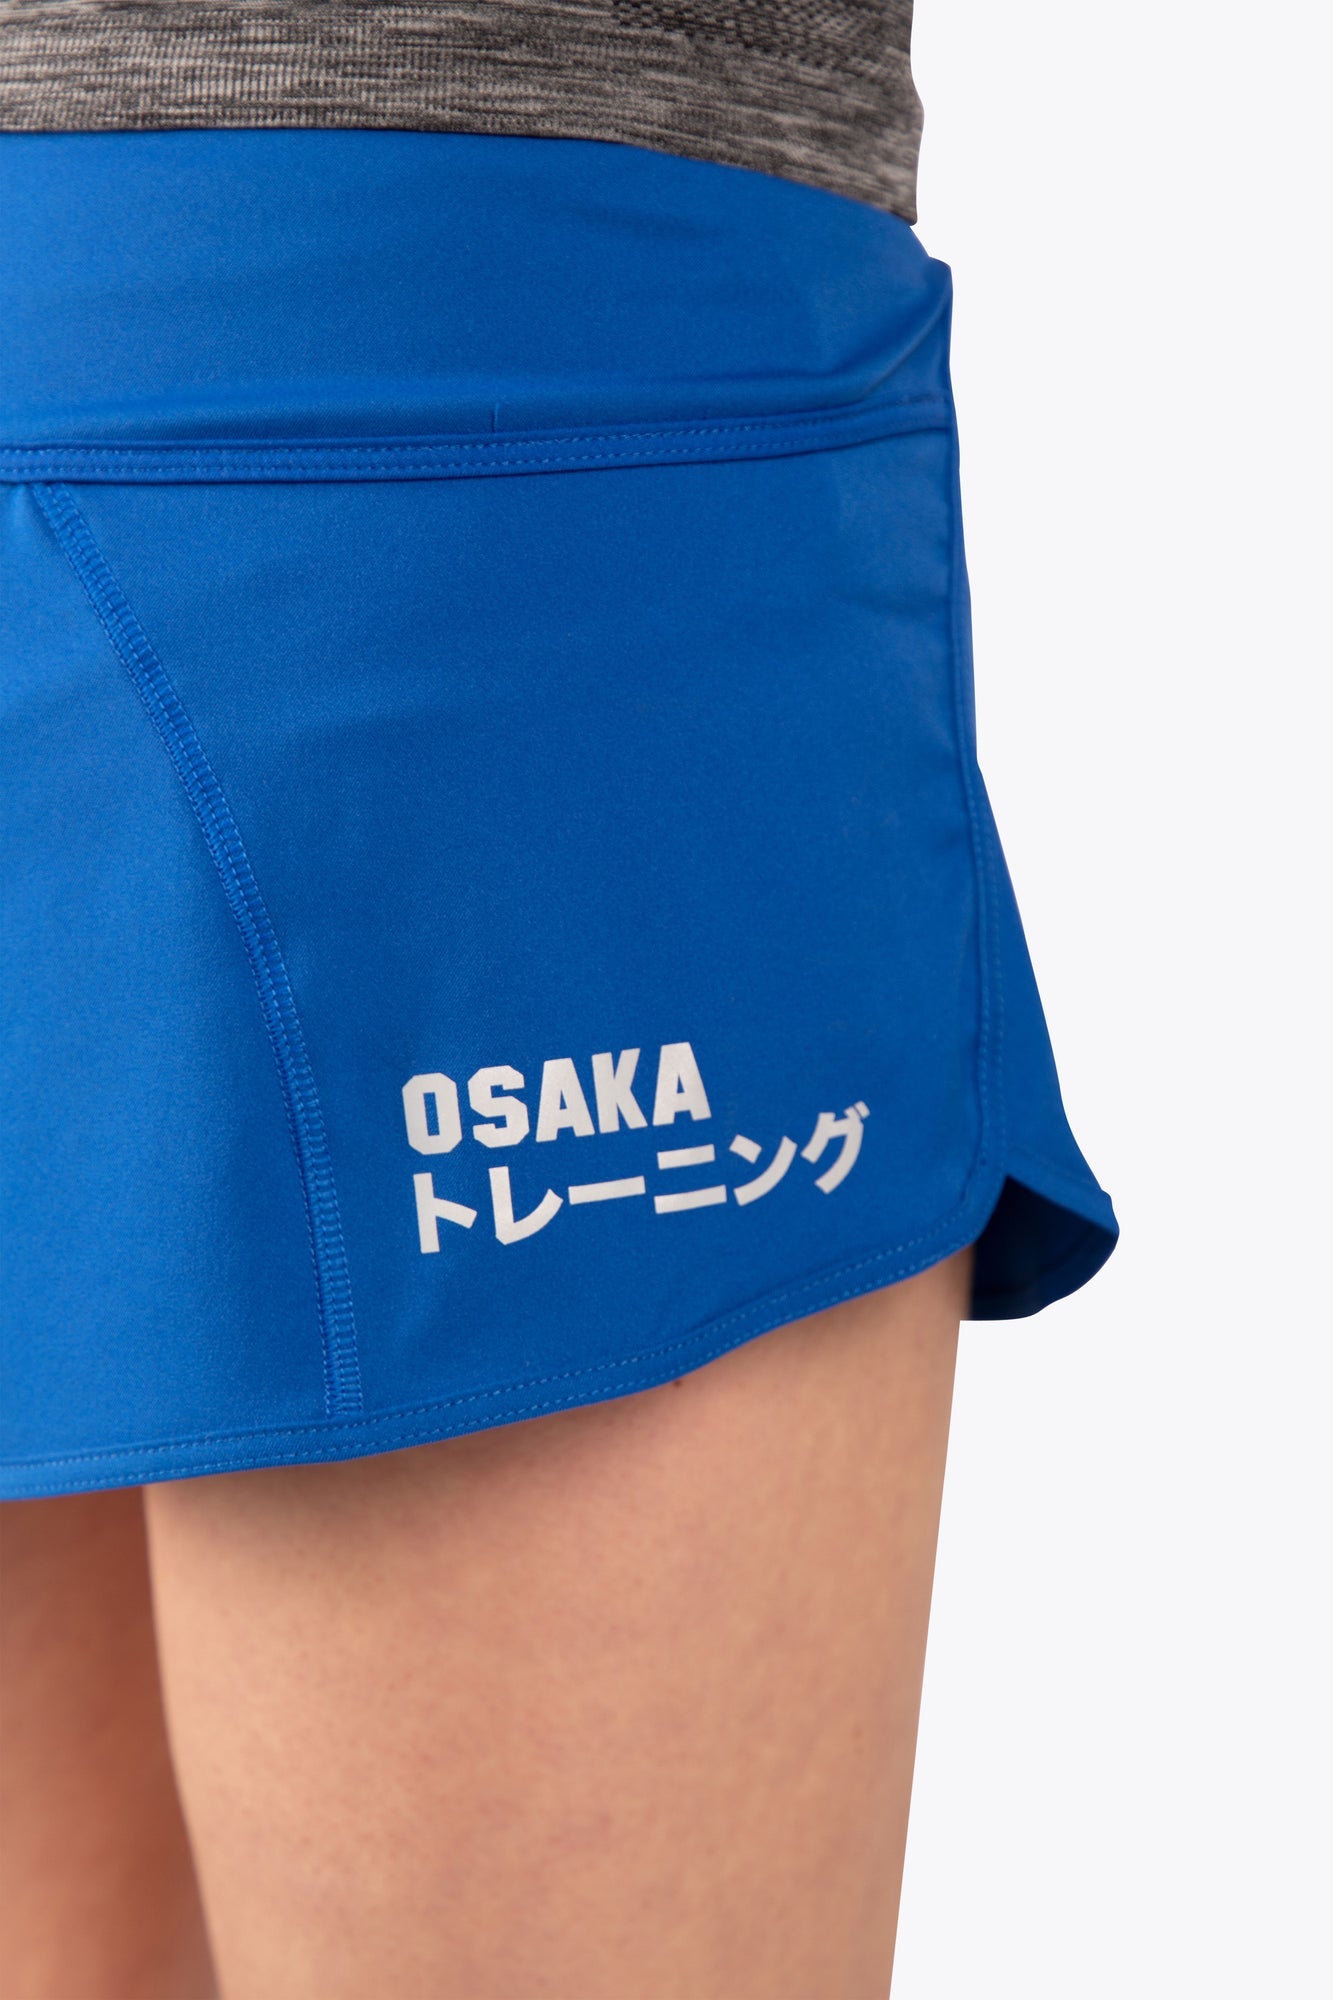 Osaka Women's Training Short (Royal Blue) - Padellife.dk